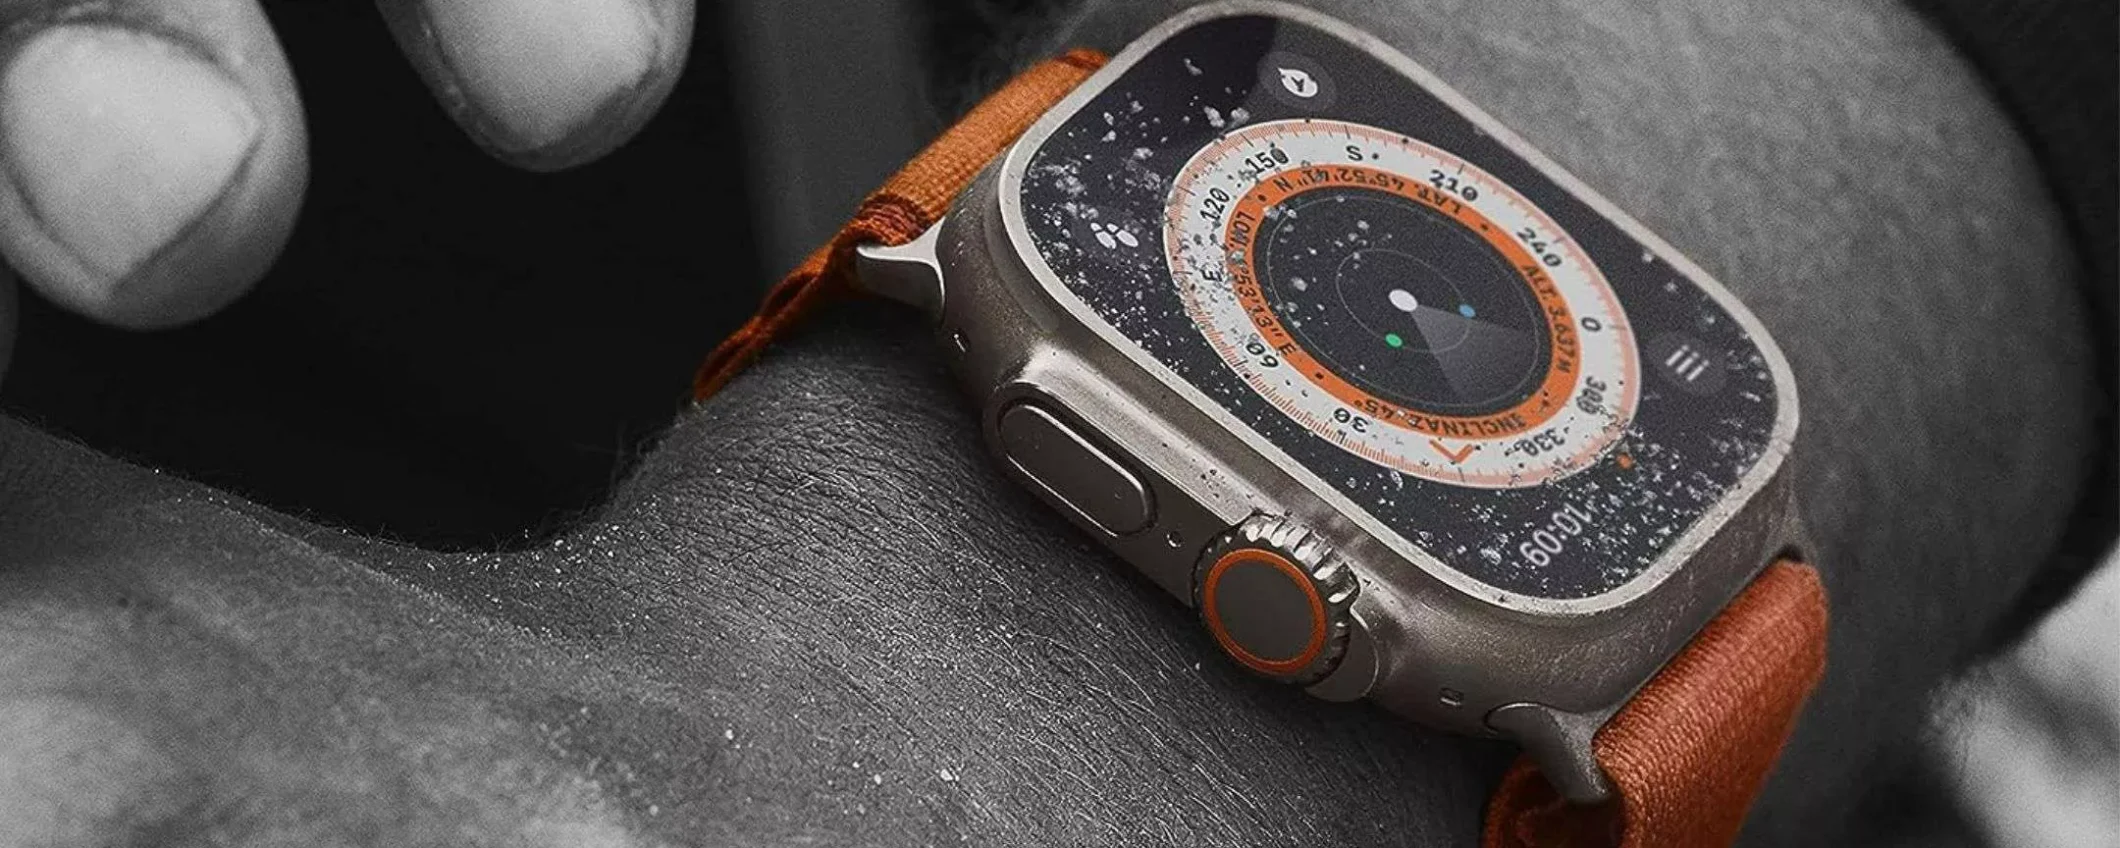 Apple Watch Ultra 2 a soli 799,99€: IMPERDIBILE a questa cifra